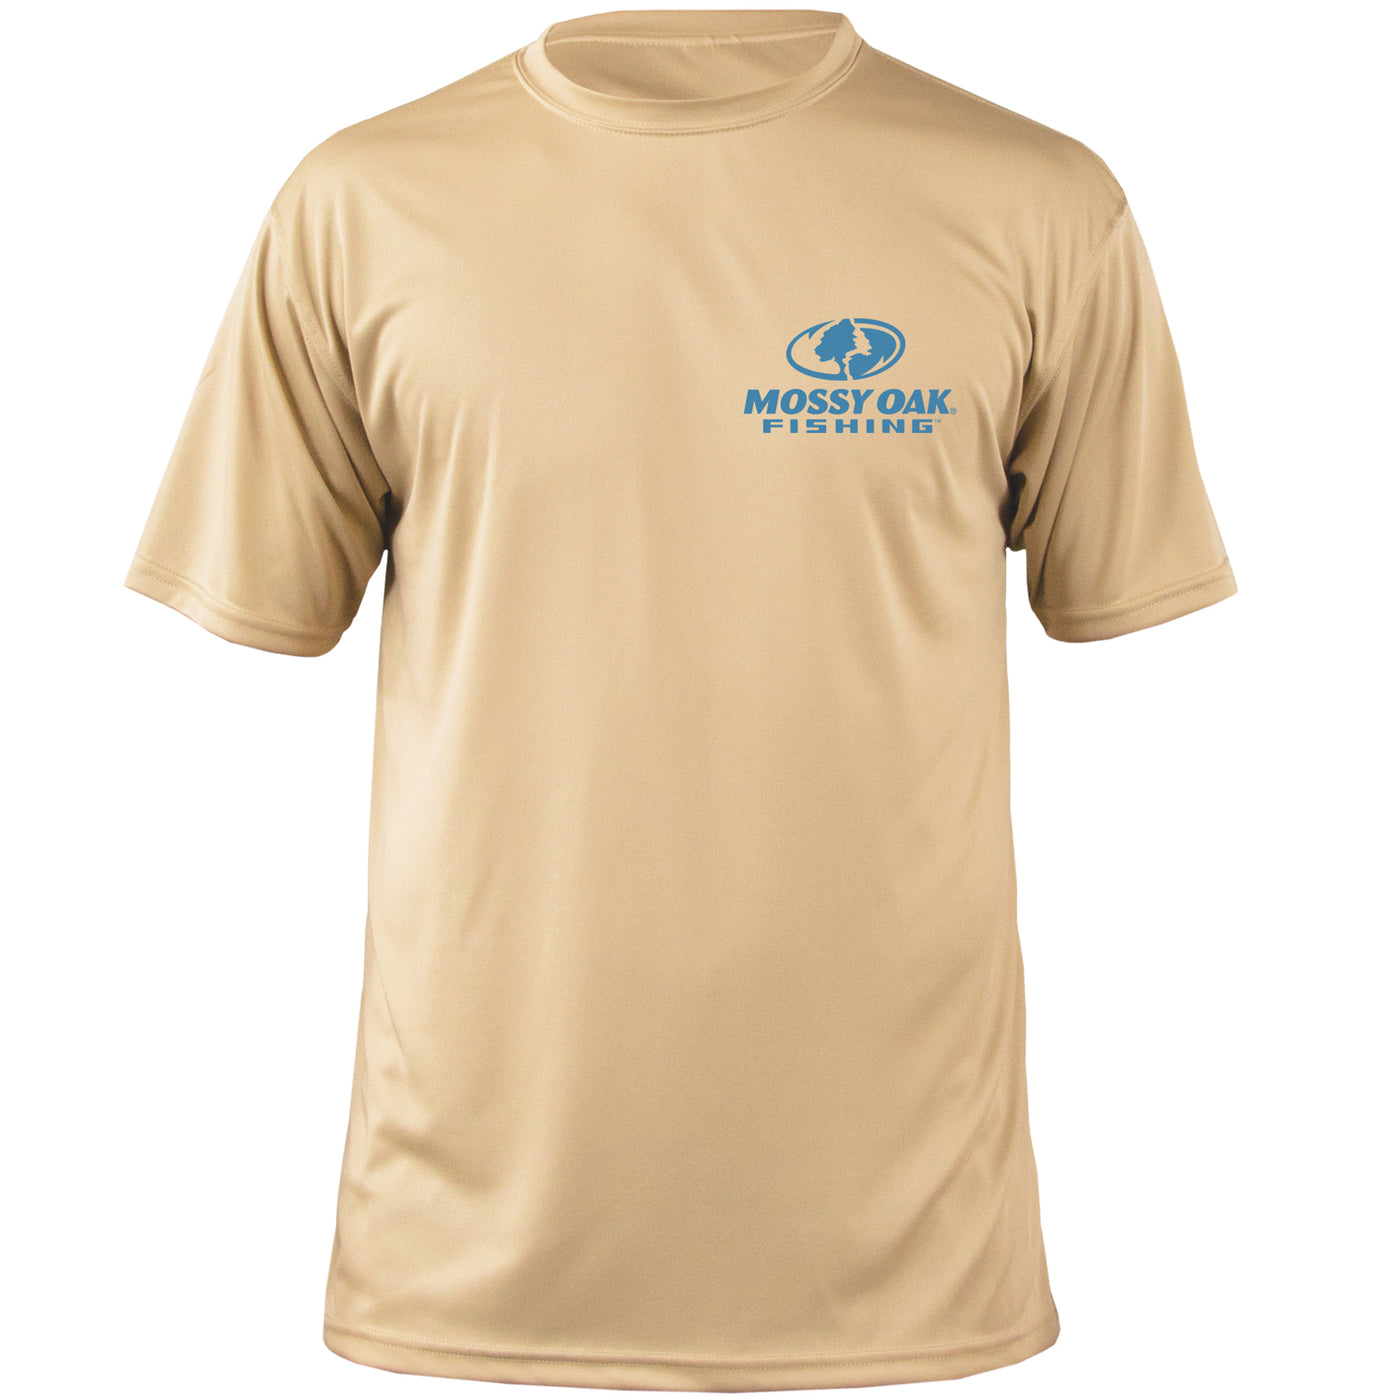 Mossy Oak Fishing Graphic Shirt Short Sleeve Vegas Gold Front